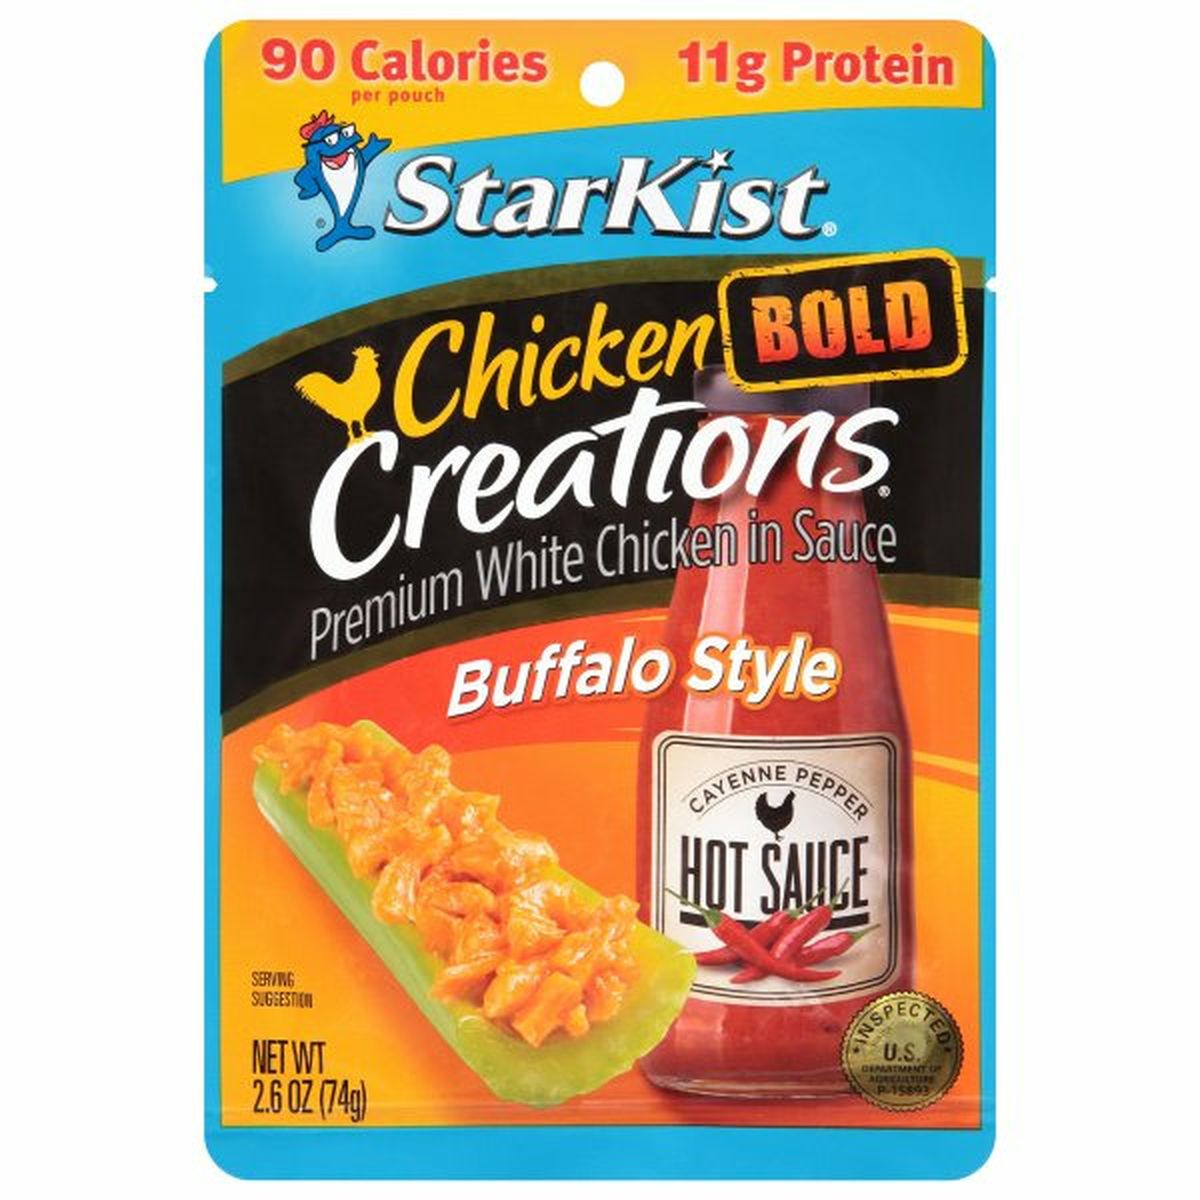 Calories in StarKists Chicken Creations Chicken, Premium White, Buffalo Style, Bold, in Sauce